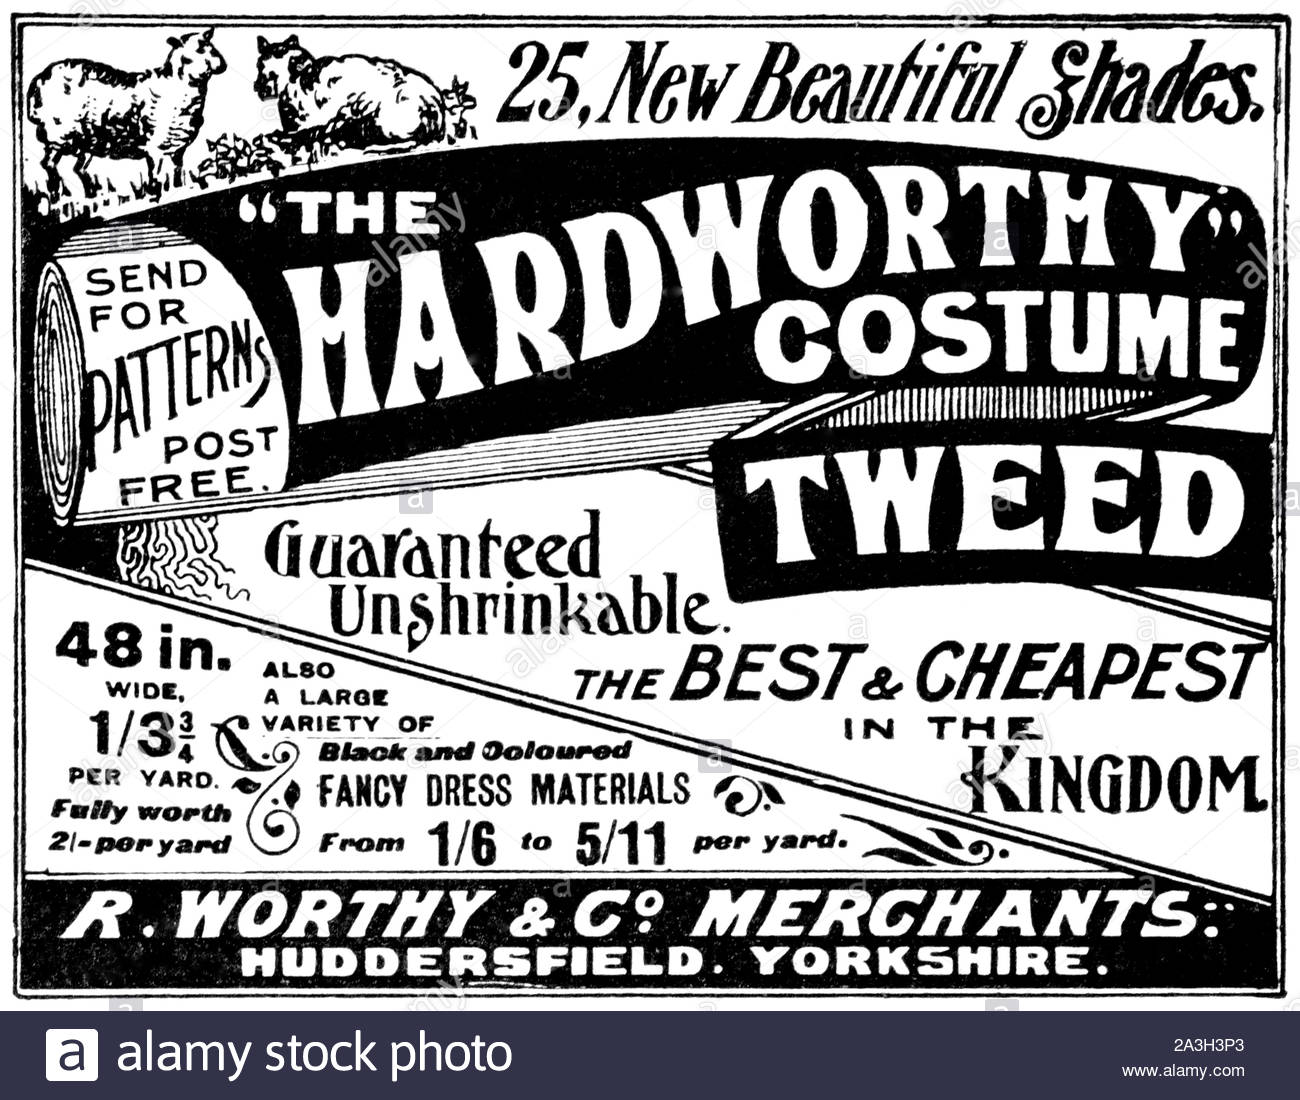 Victorian era, The Hardworthy Costume, vintage advertising from 1899 Stock Photo